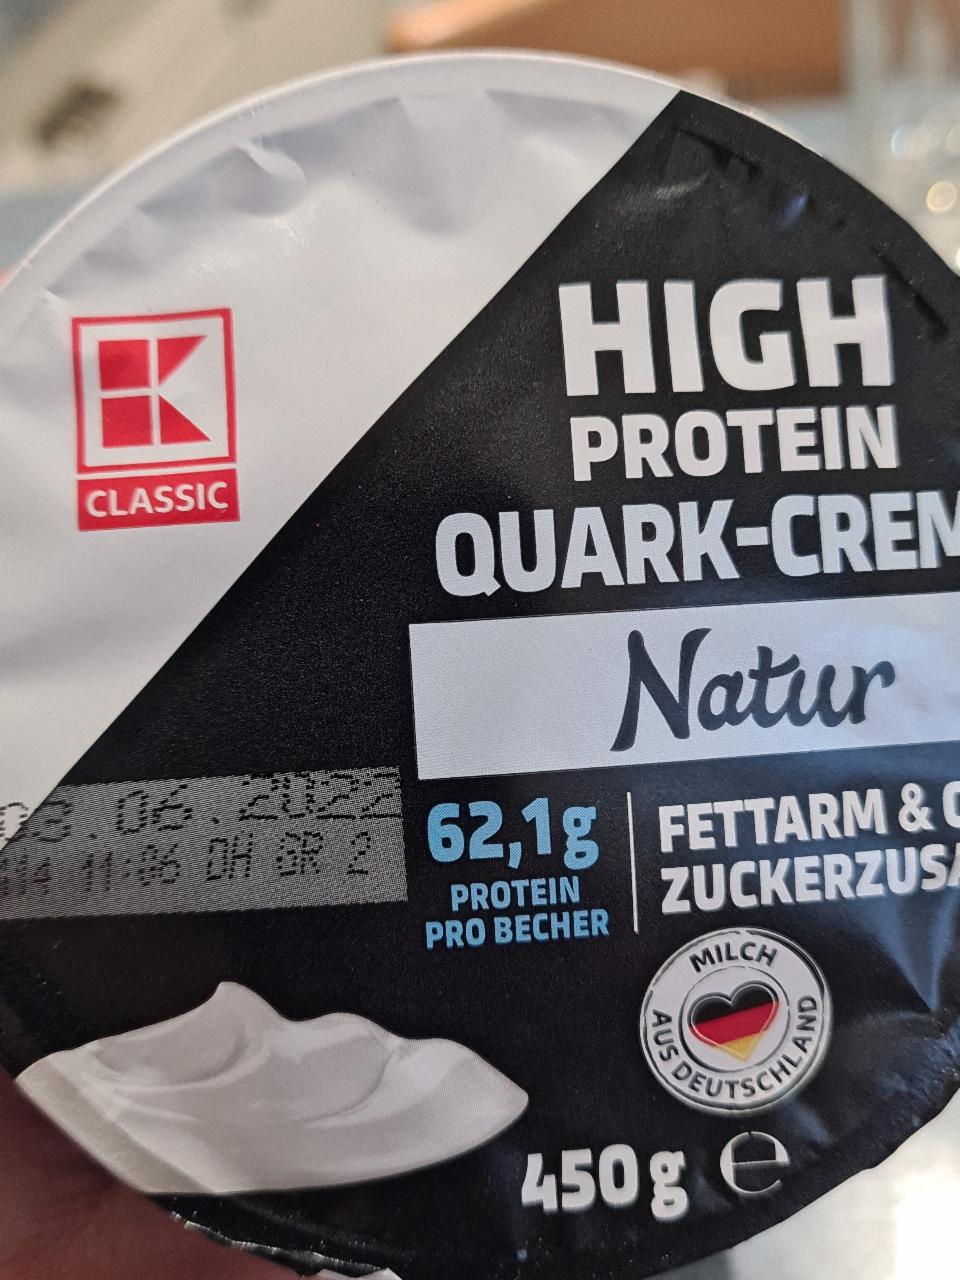 Zdjęcia - High protein quark creme natur K-classic